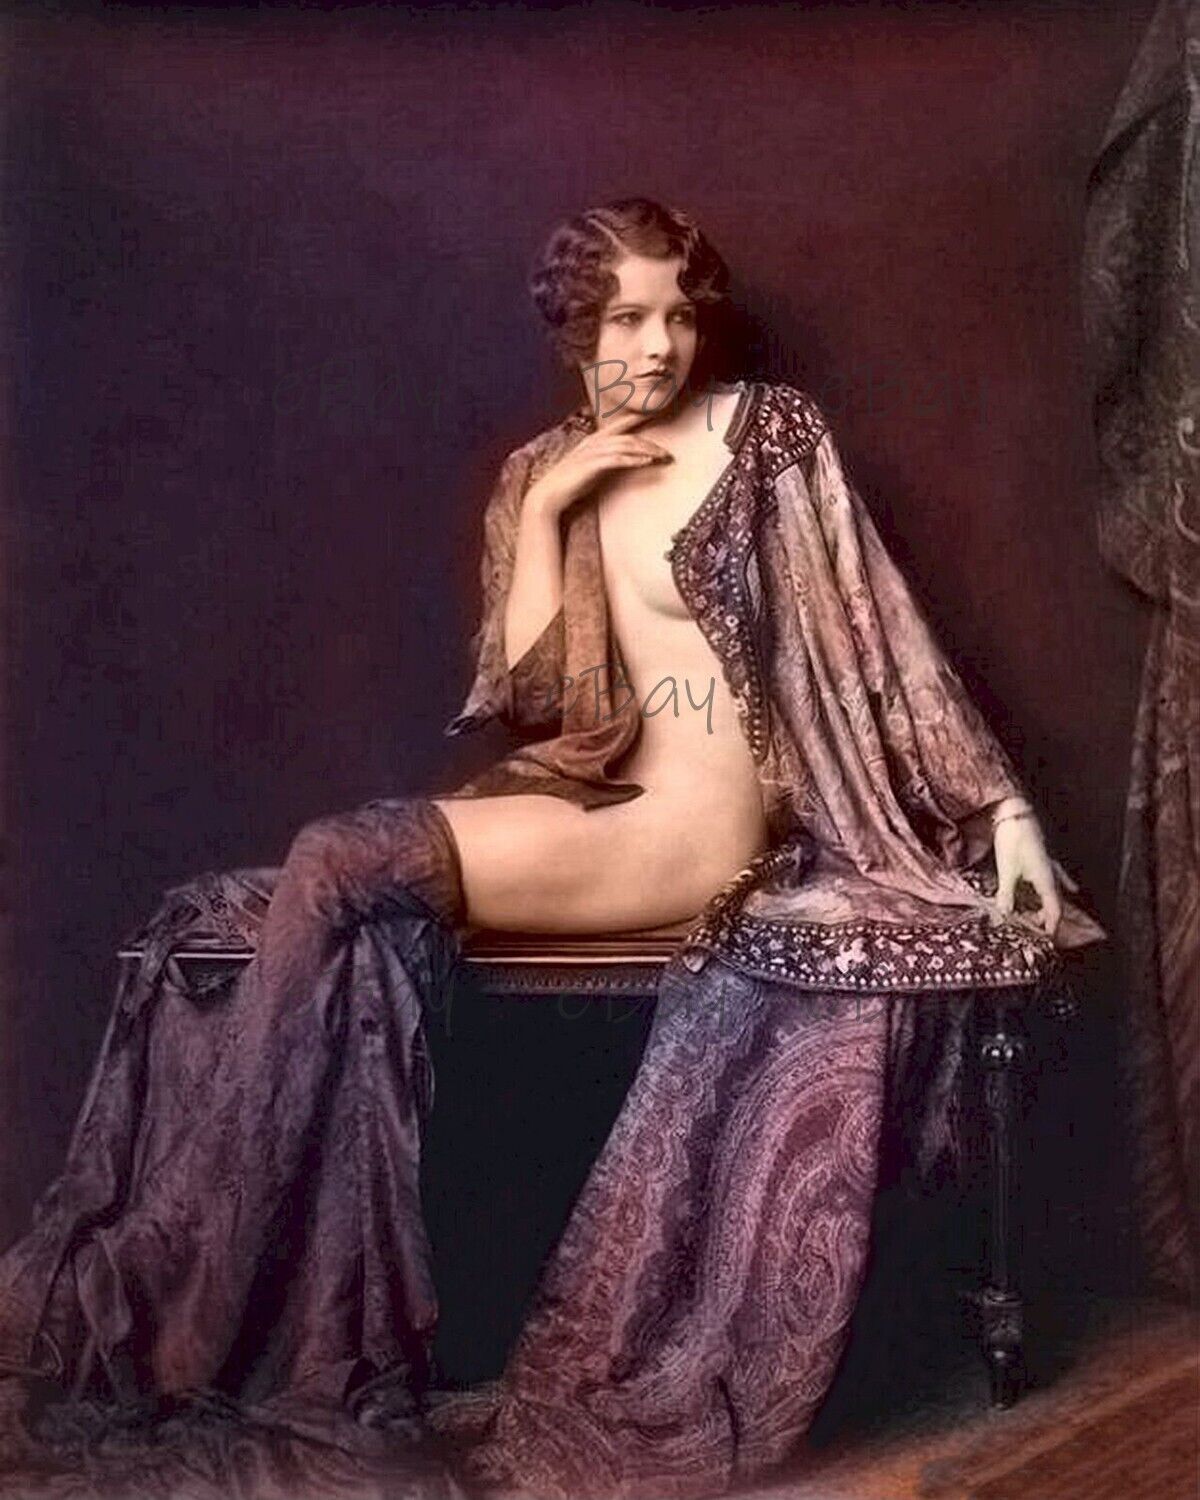 JEAN ACKERMAN ZIEGFELD GIRL (1920's) 8x10 Photo Reprint